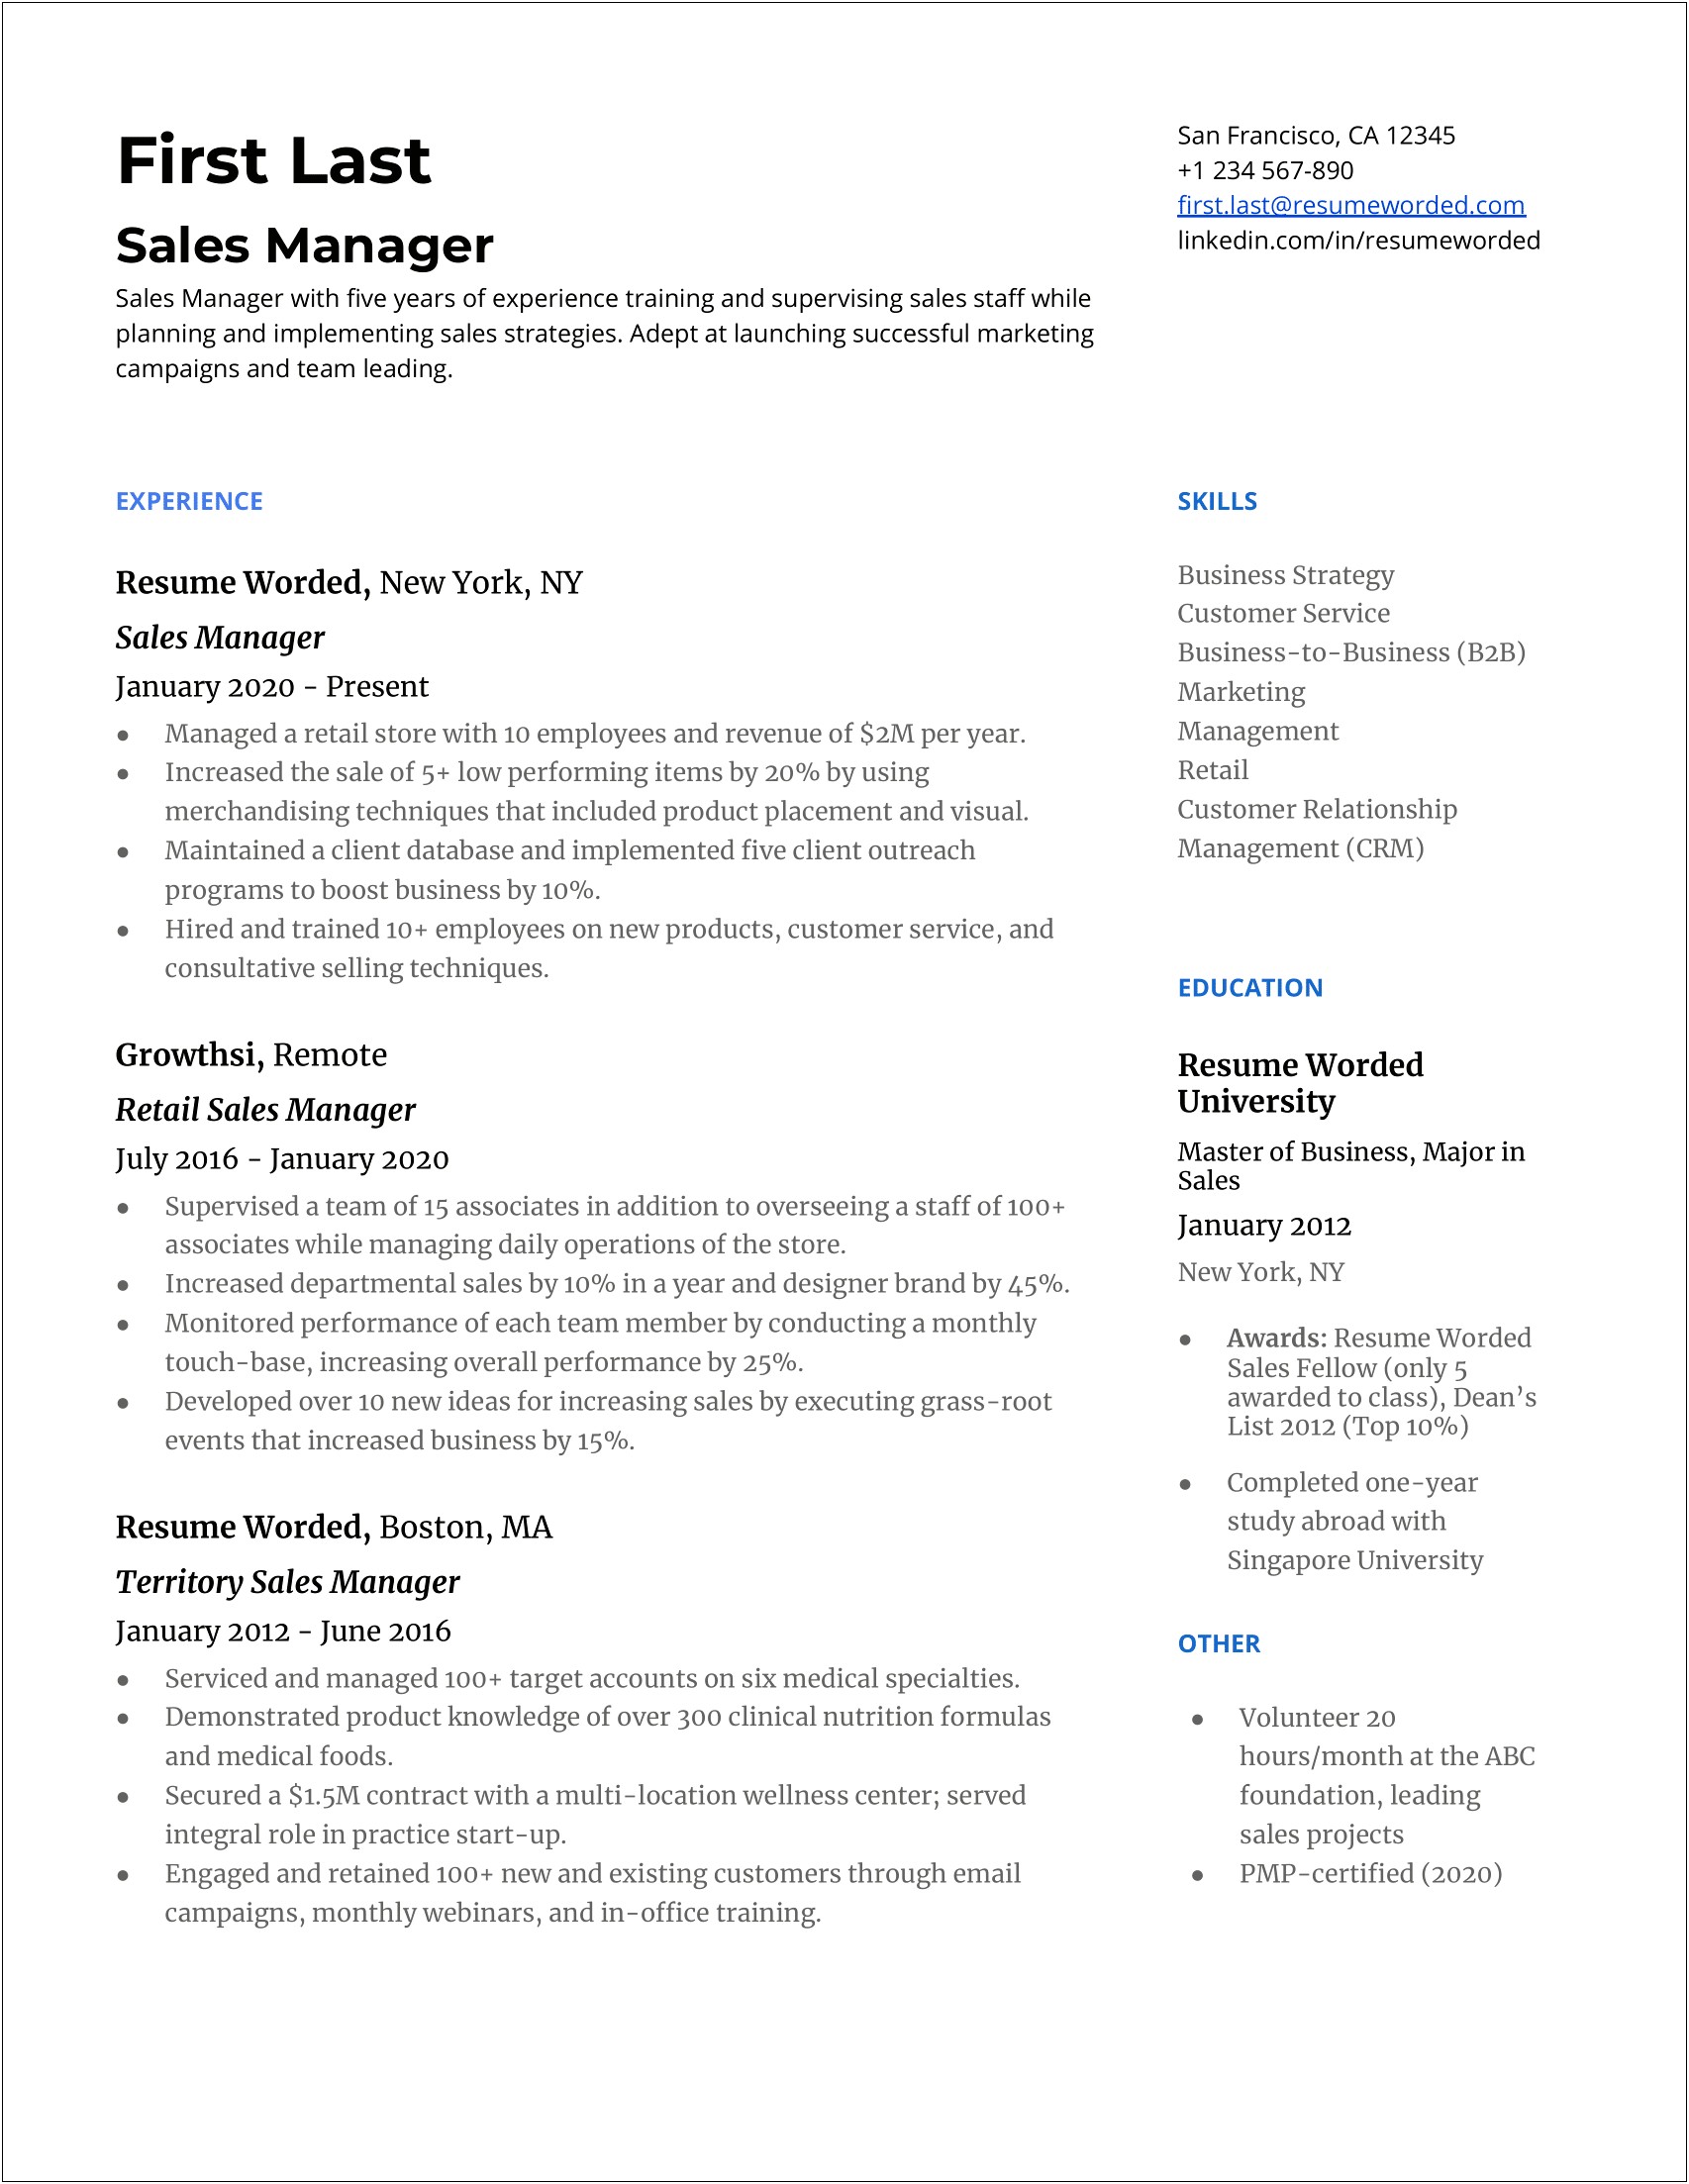 Resume Format For Real Estate Sales Manager